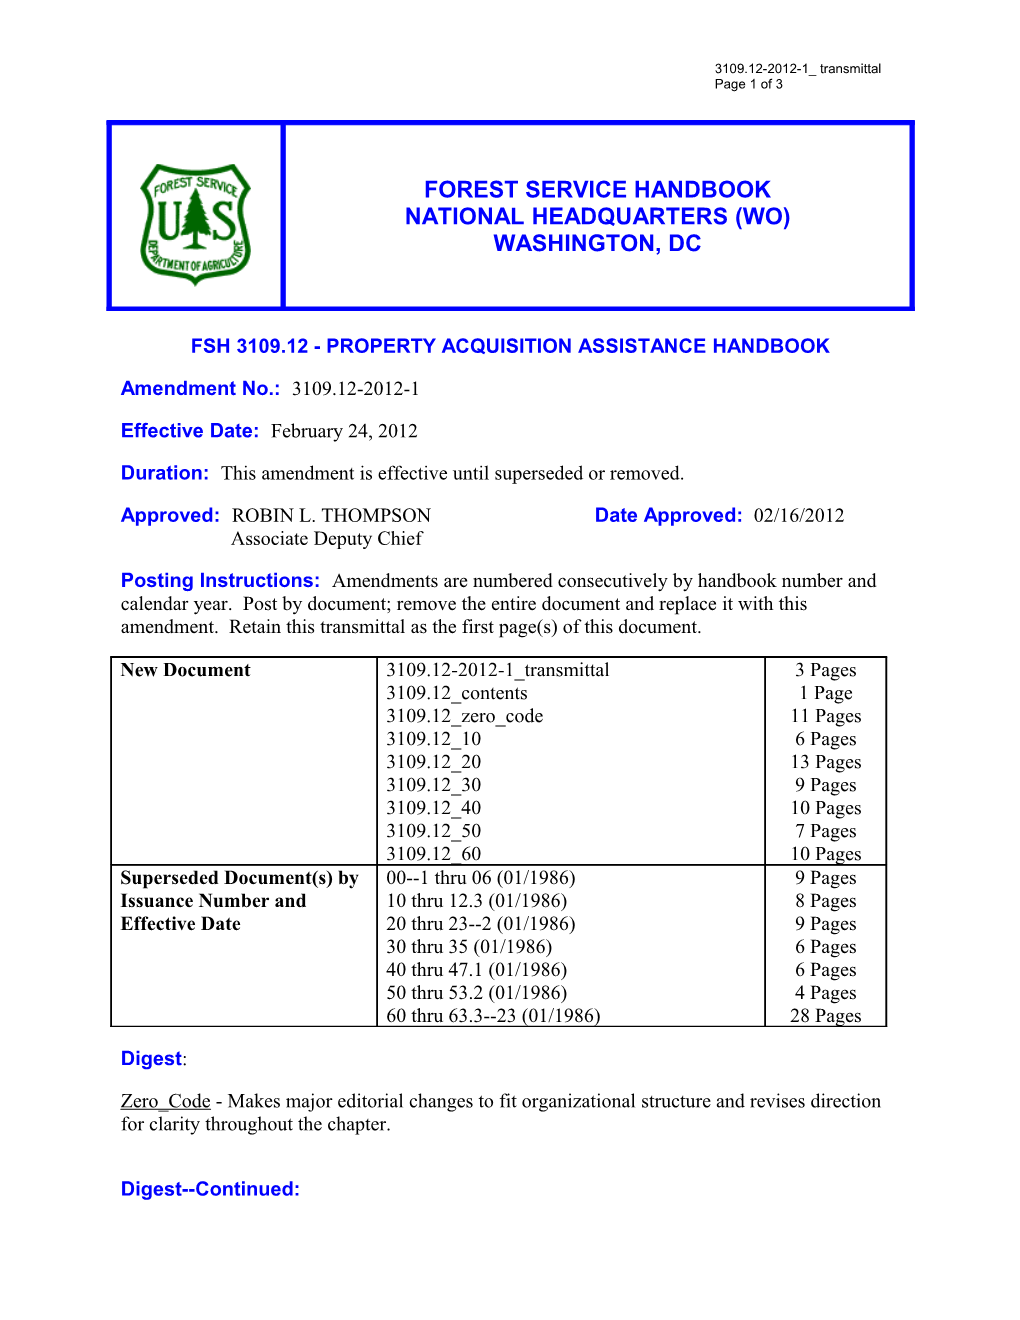 Fsh 3109.12 - PROPERTY ACQUISITION ASSISTANCE Handbook